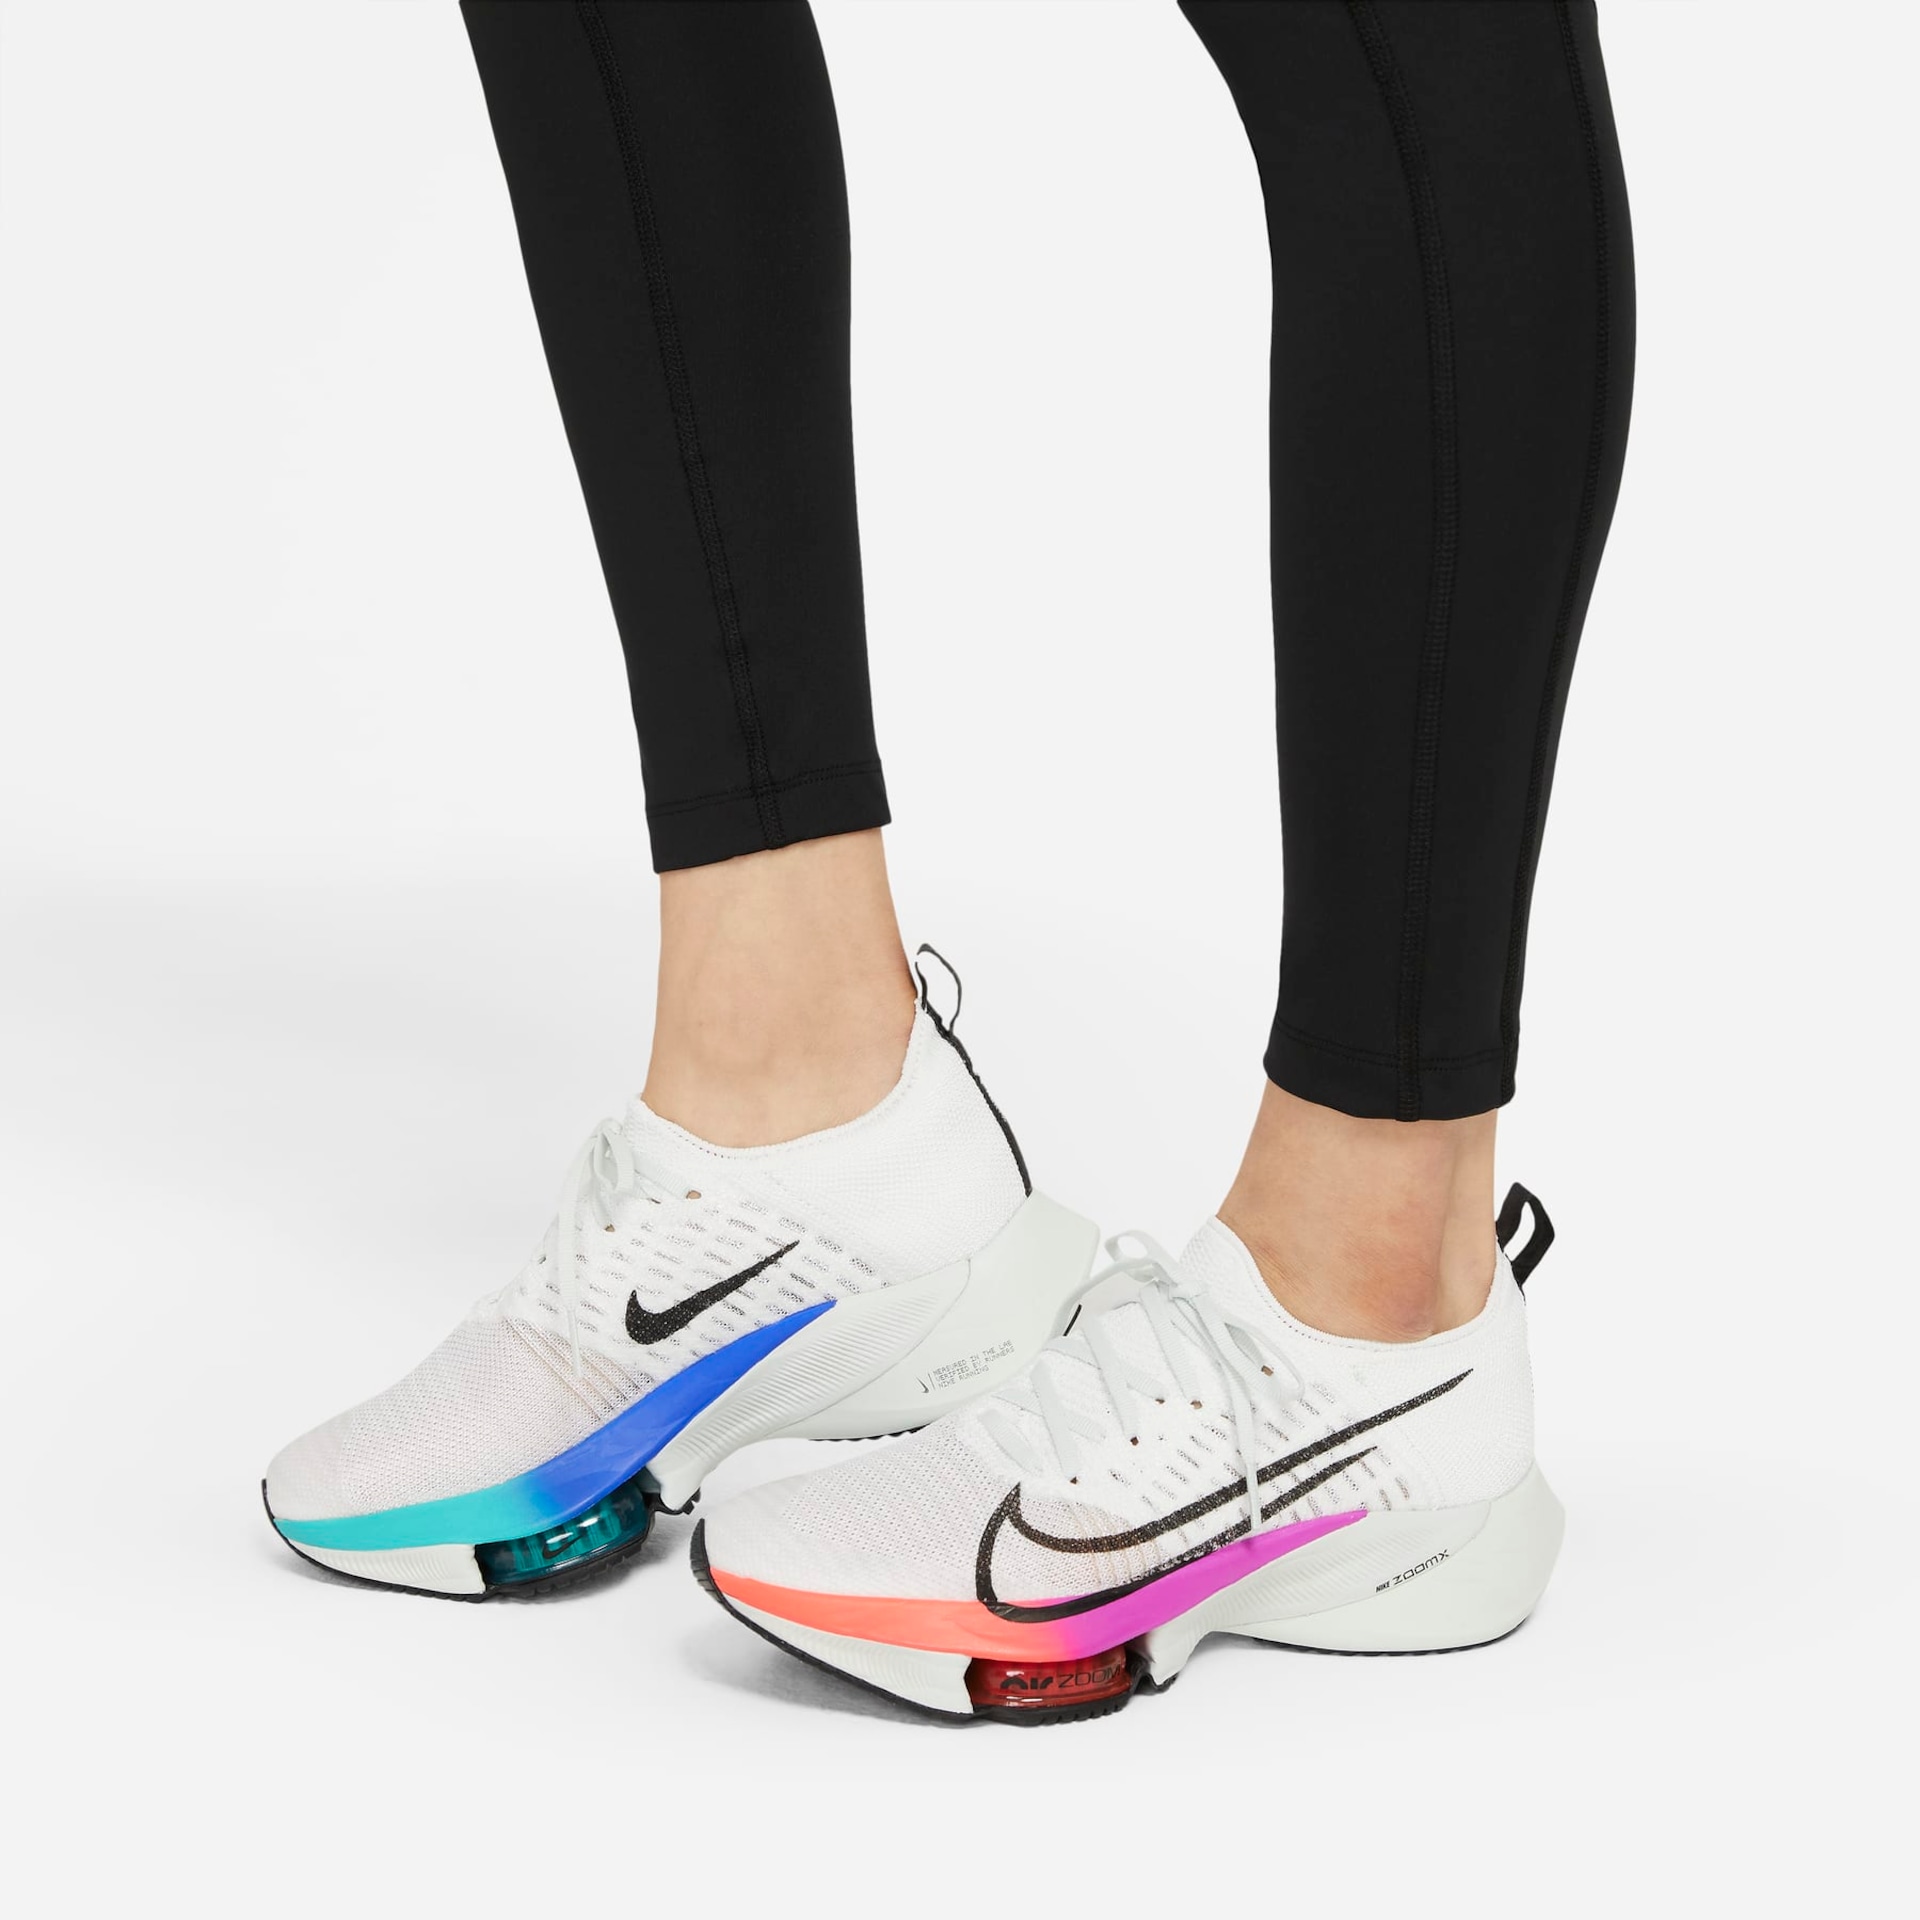 Legging Nike Epic Fast Feminina - Foto 7